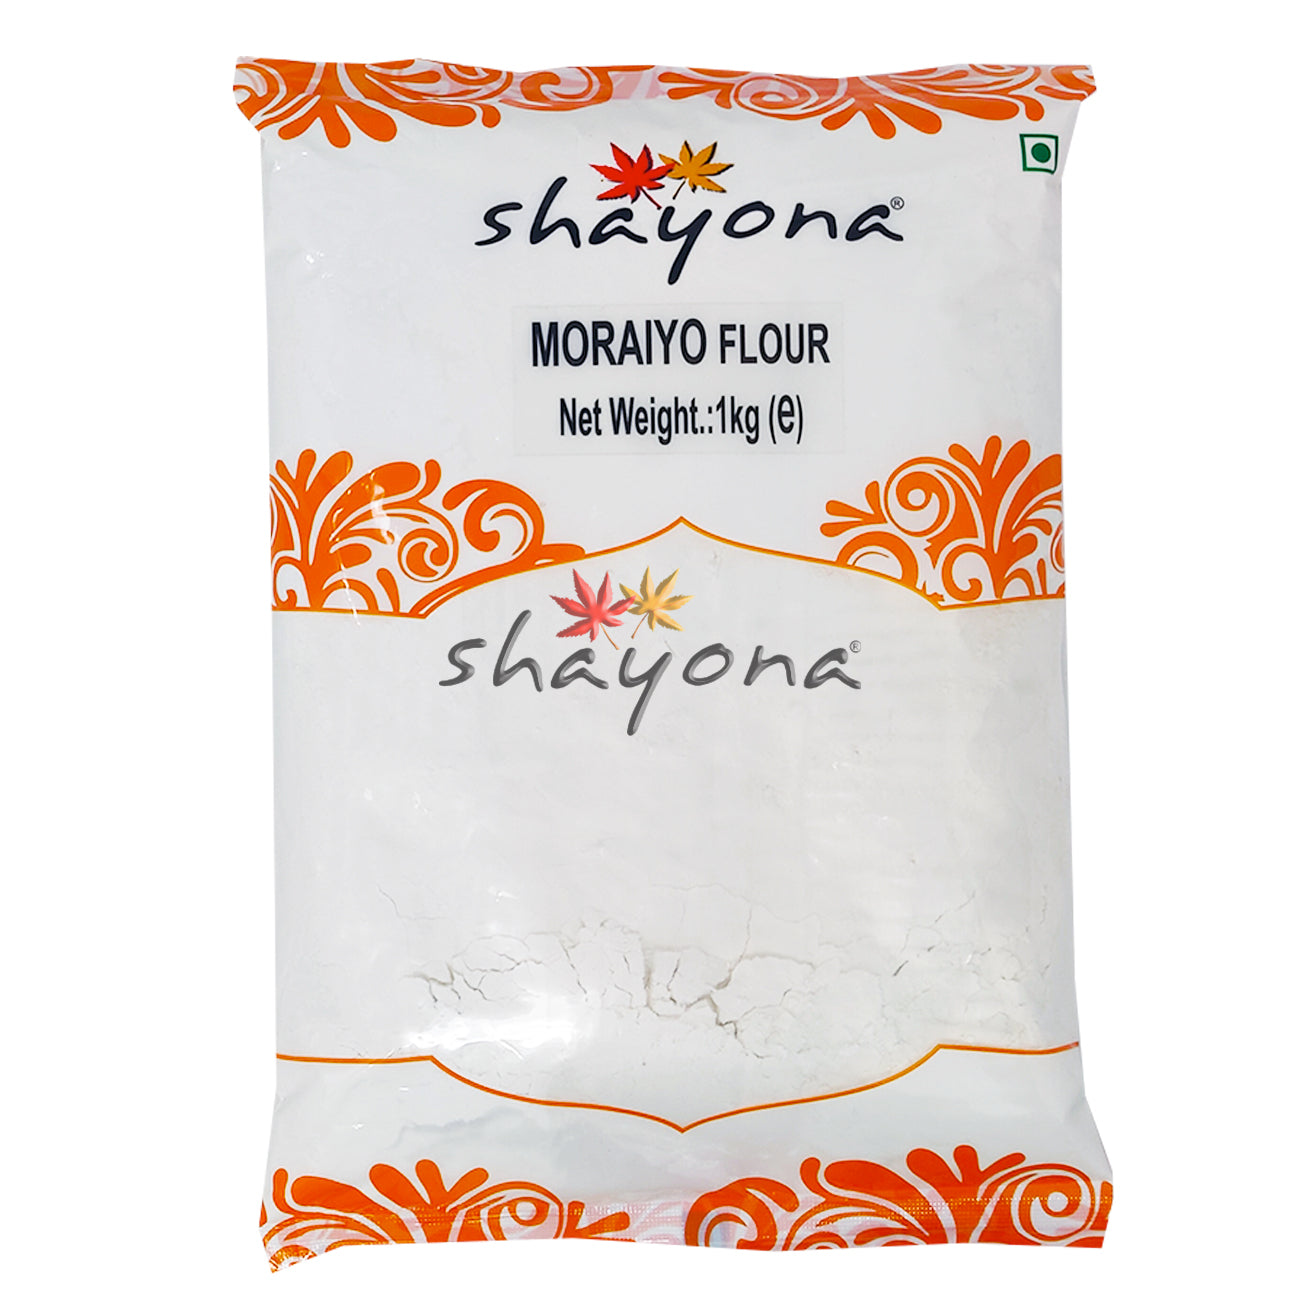 Shayona Moriyo Flour